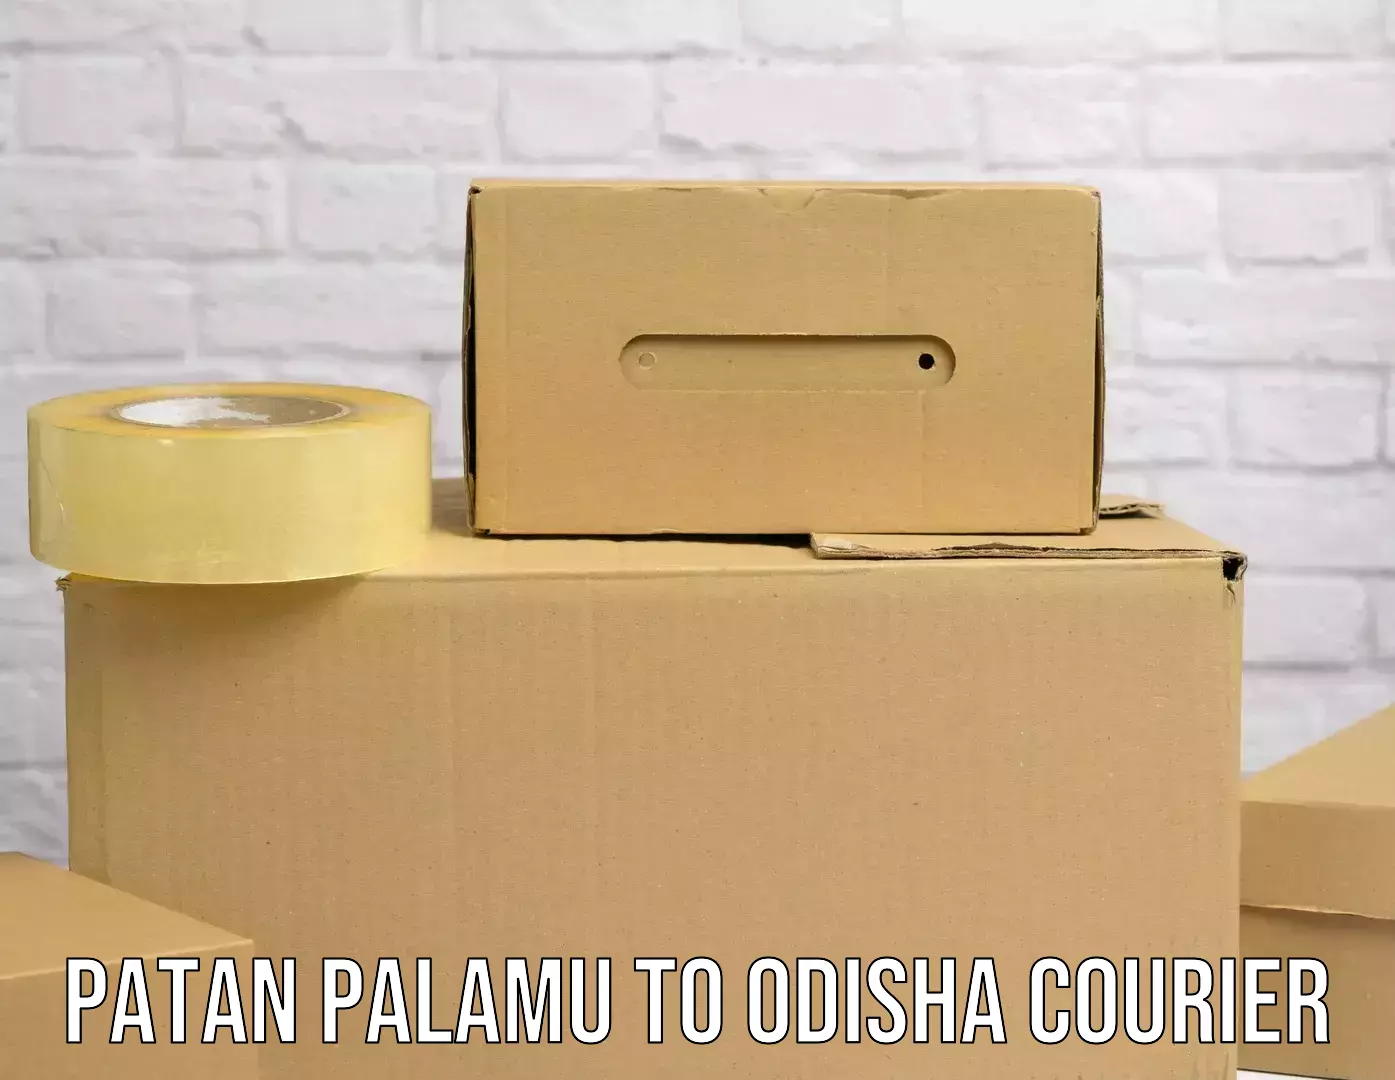 State-of-the-art courier technology Patan Palamu to Pipili